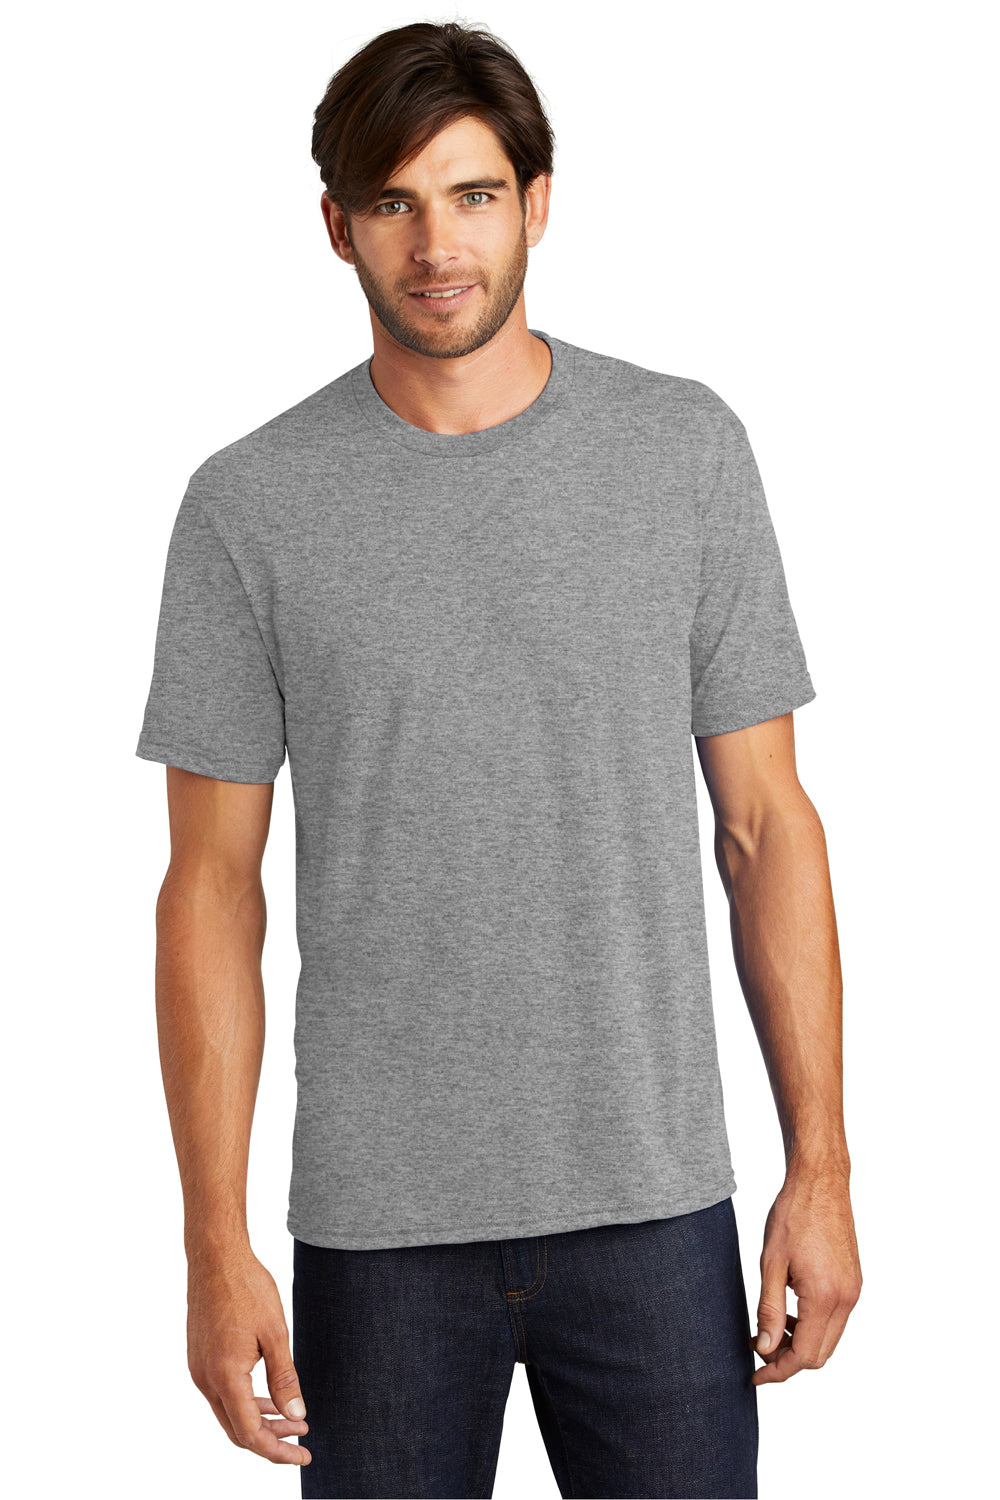 District DM130 Mens Perfect Tri Short Sleeve Crewneck T-Shirt Grey Frost Front